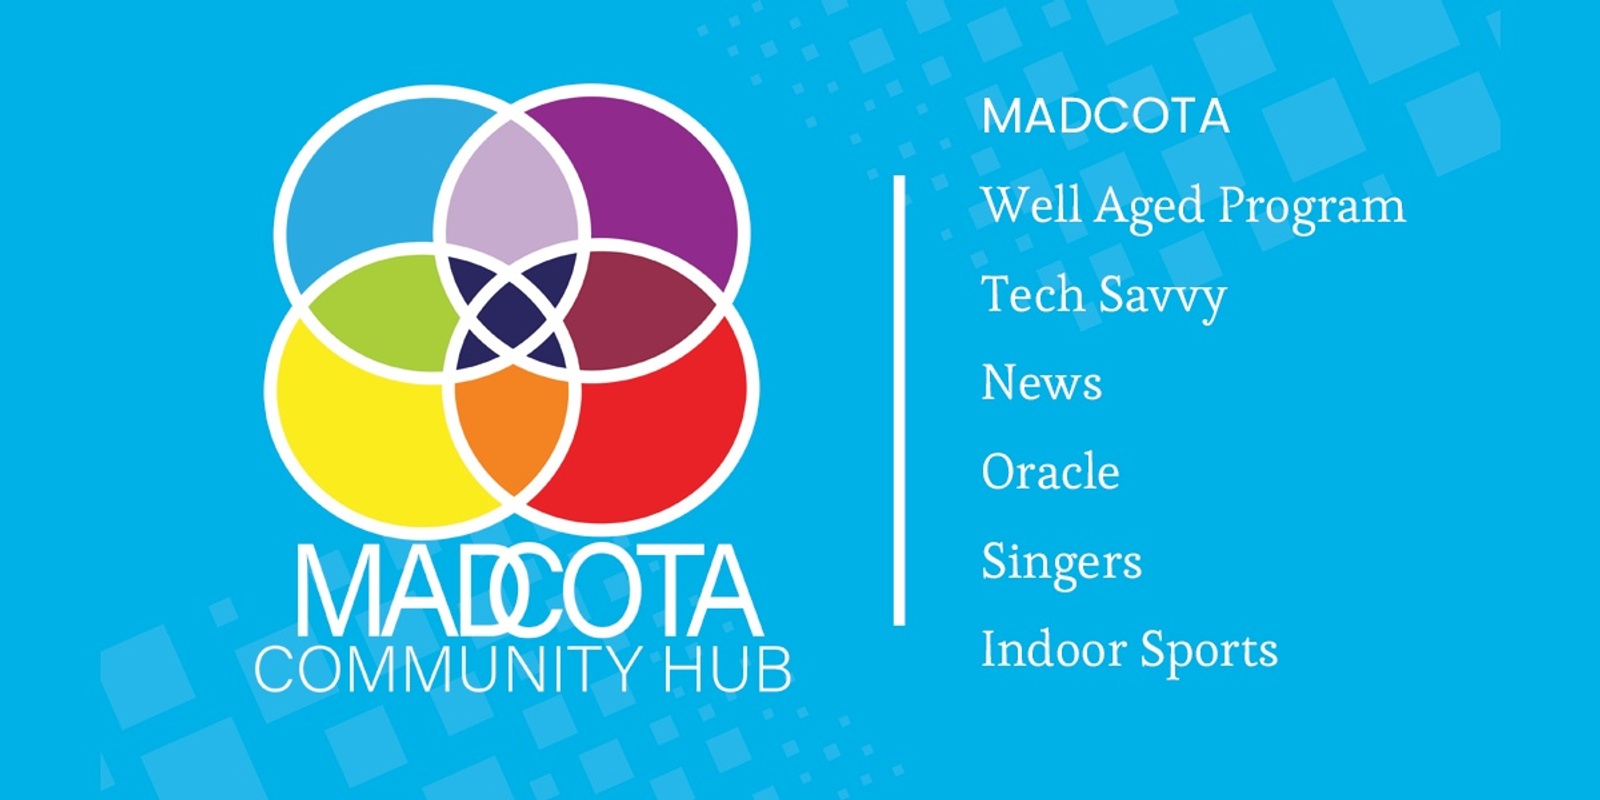 MADCOTA Community Hub's banner